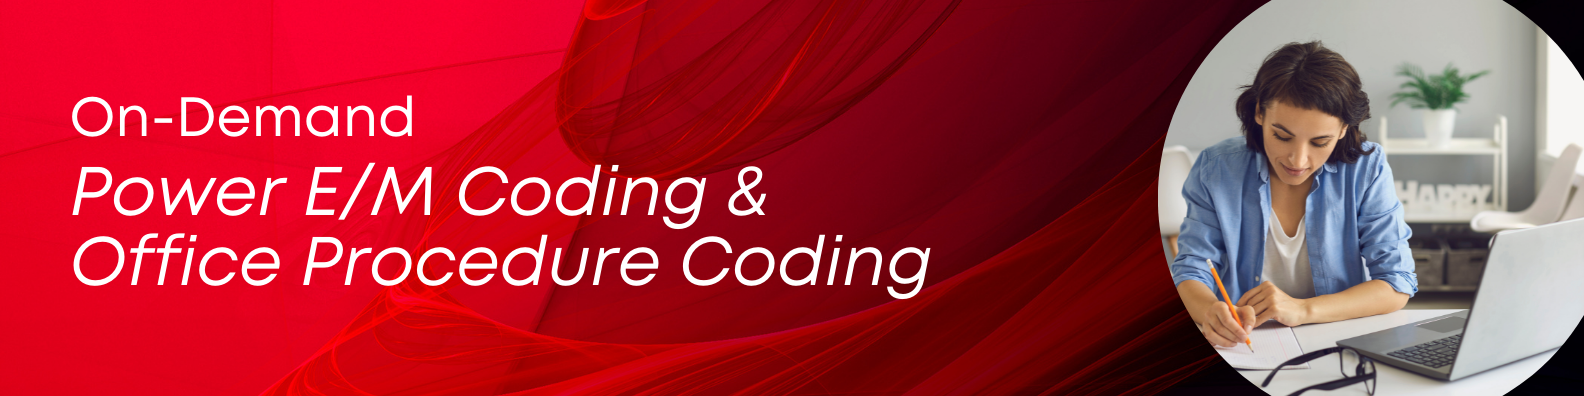 On-Demand - Power E/M Coding & Office Procedure Coding Workshop